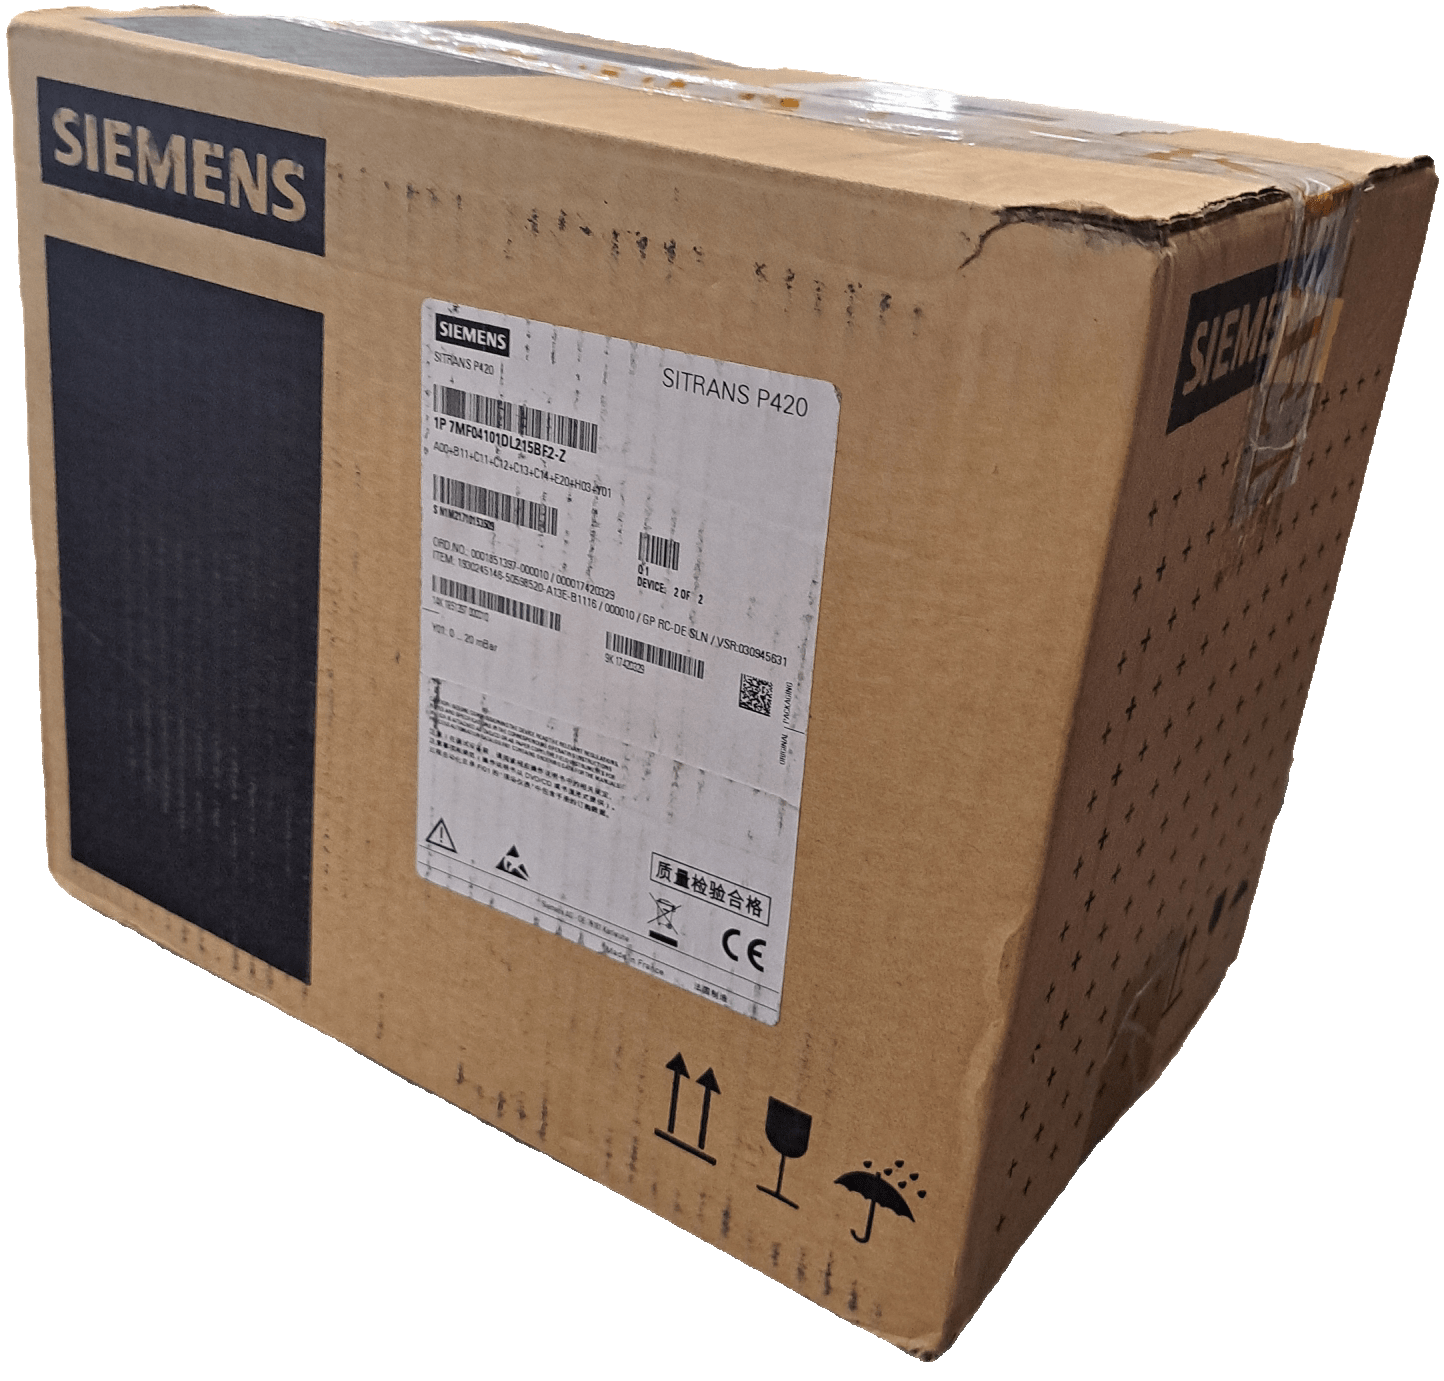 Siemens 7MF0410-1DL21-5BF2-Z - #product_category# | Klenk Maschinenhandel